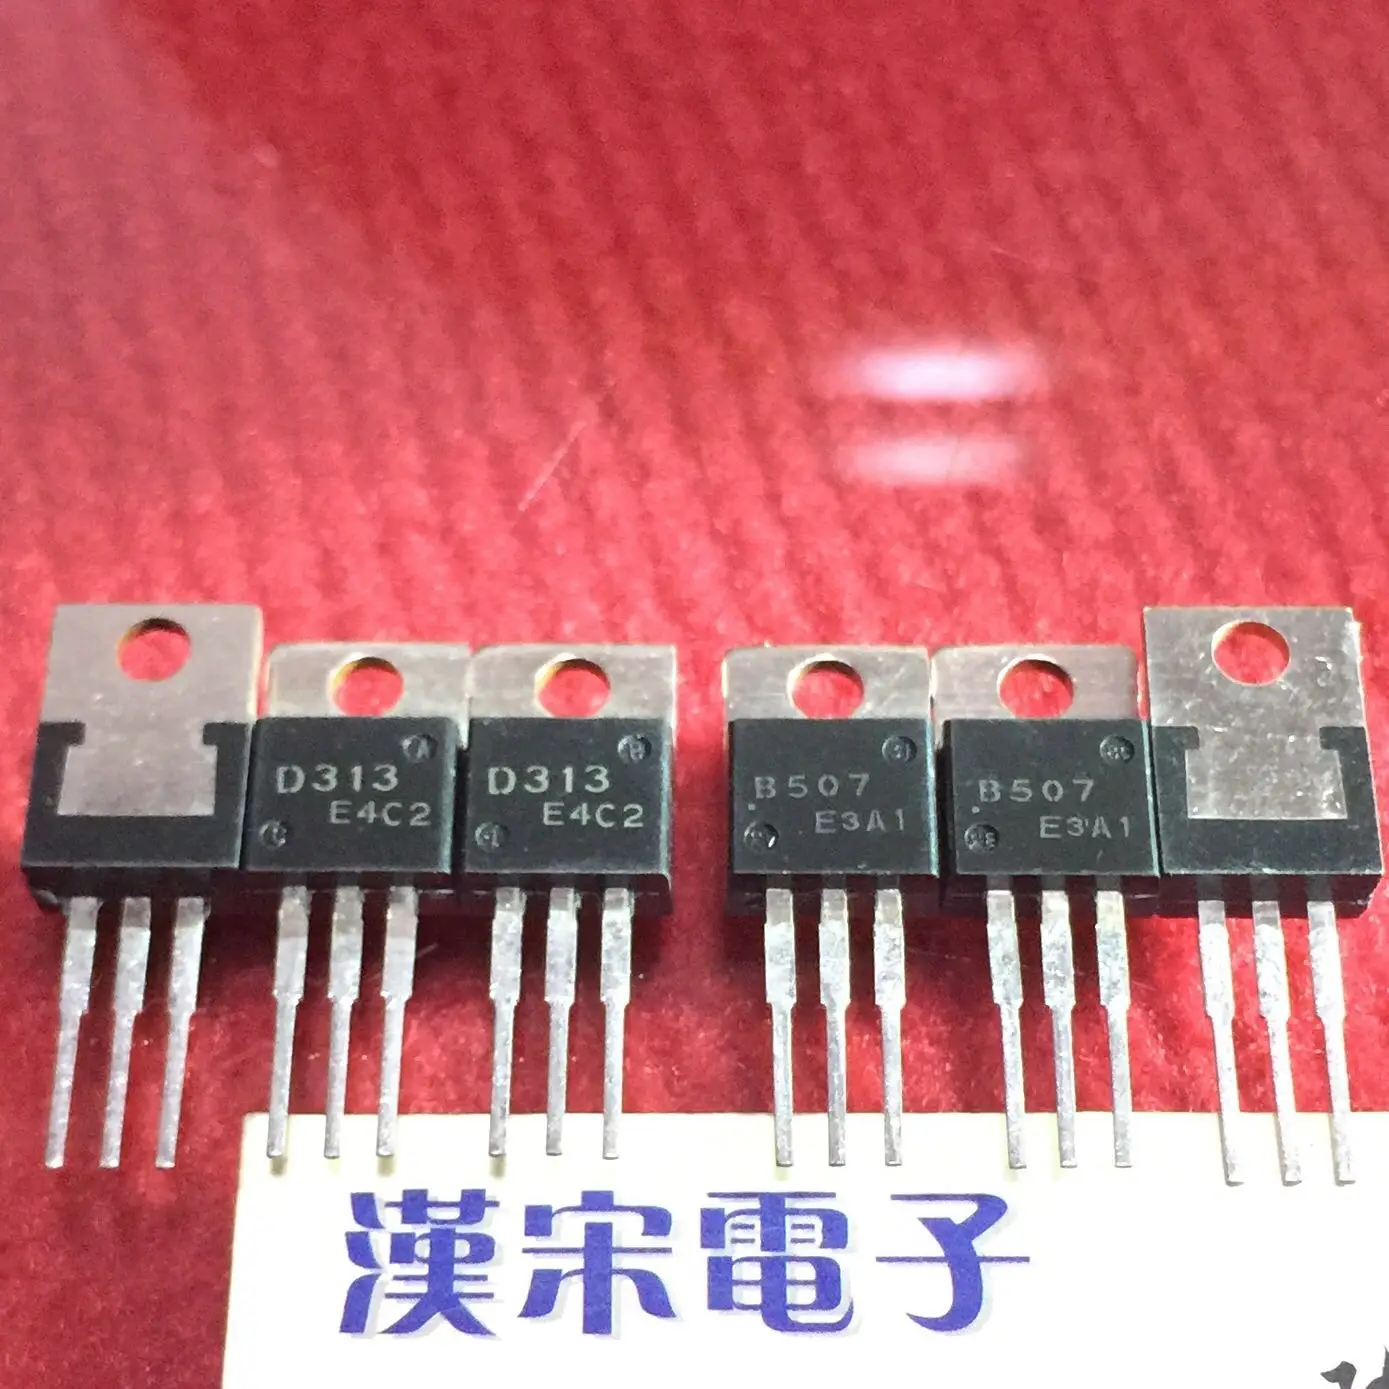 2pcs 2SC1583 Transistor ZIP-5